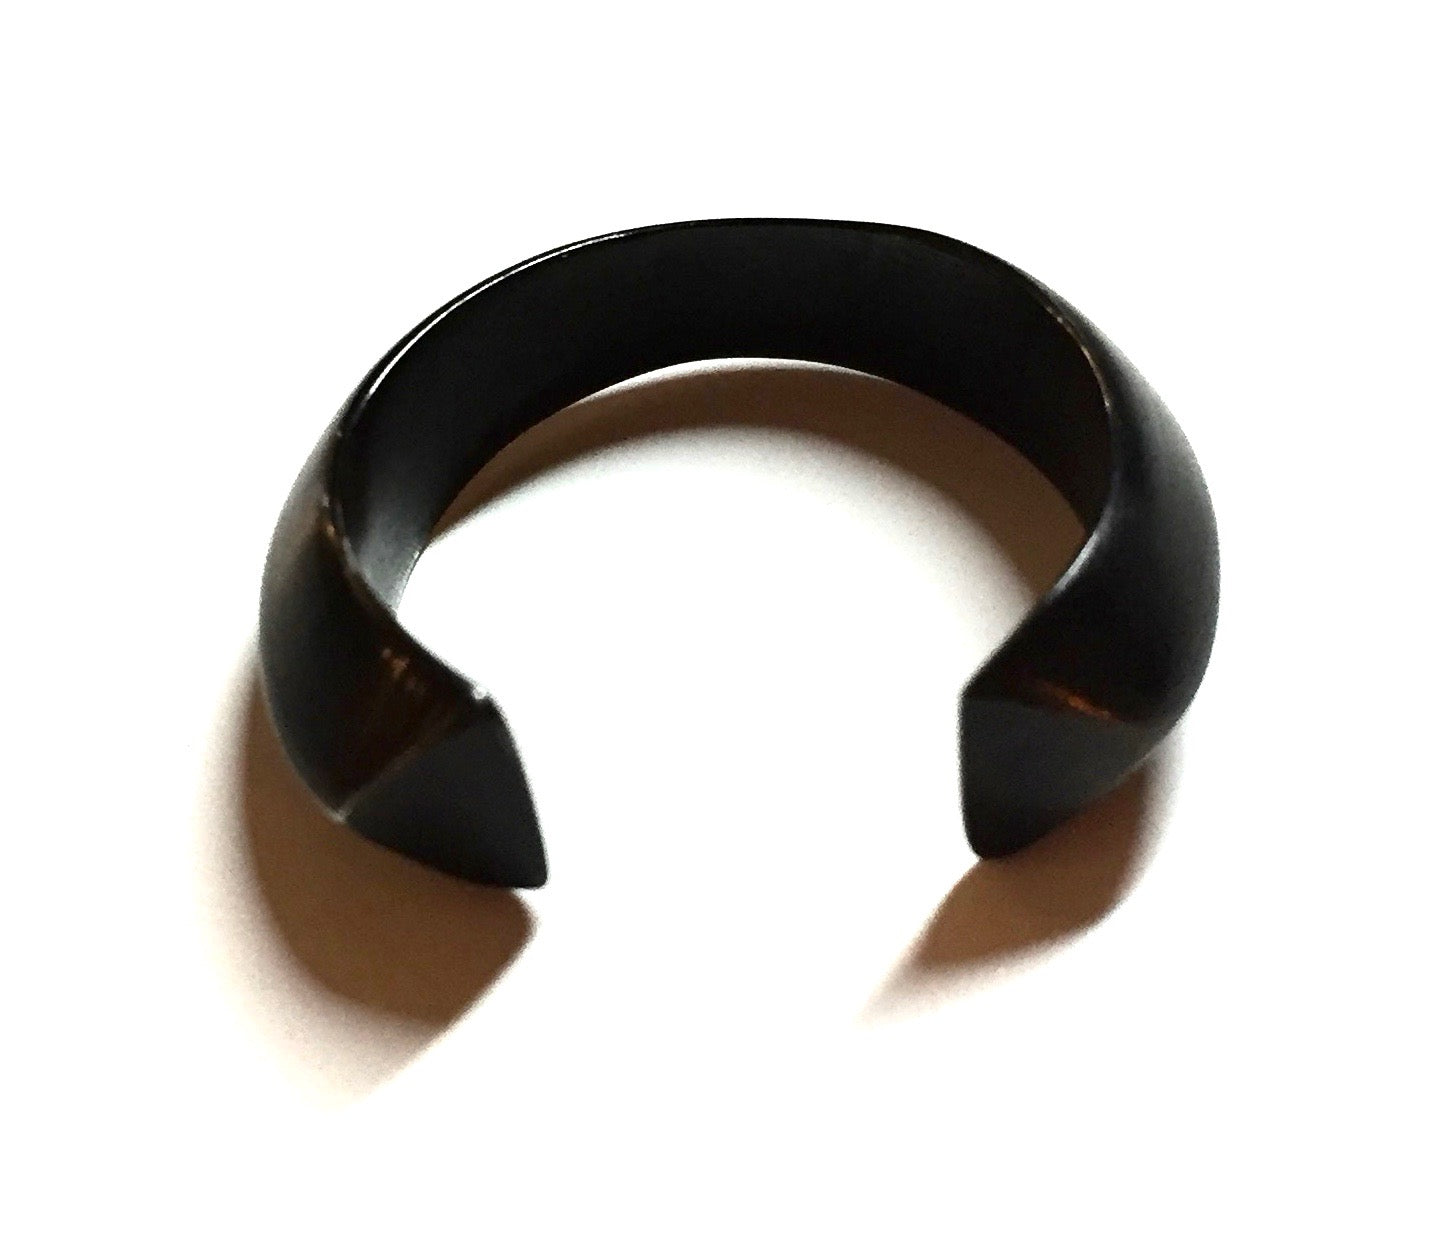 ARTAX FARRIER RING BLACK | Equestrian Style Ring | Stainless Steel Jewelry - AtelierCG™